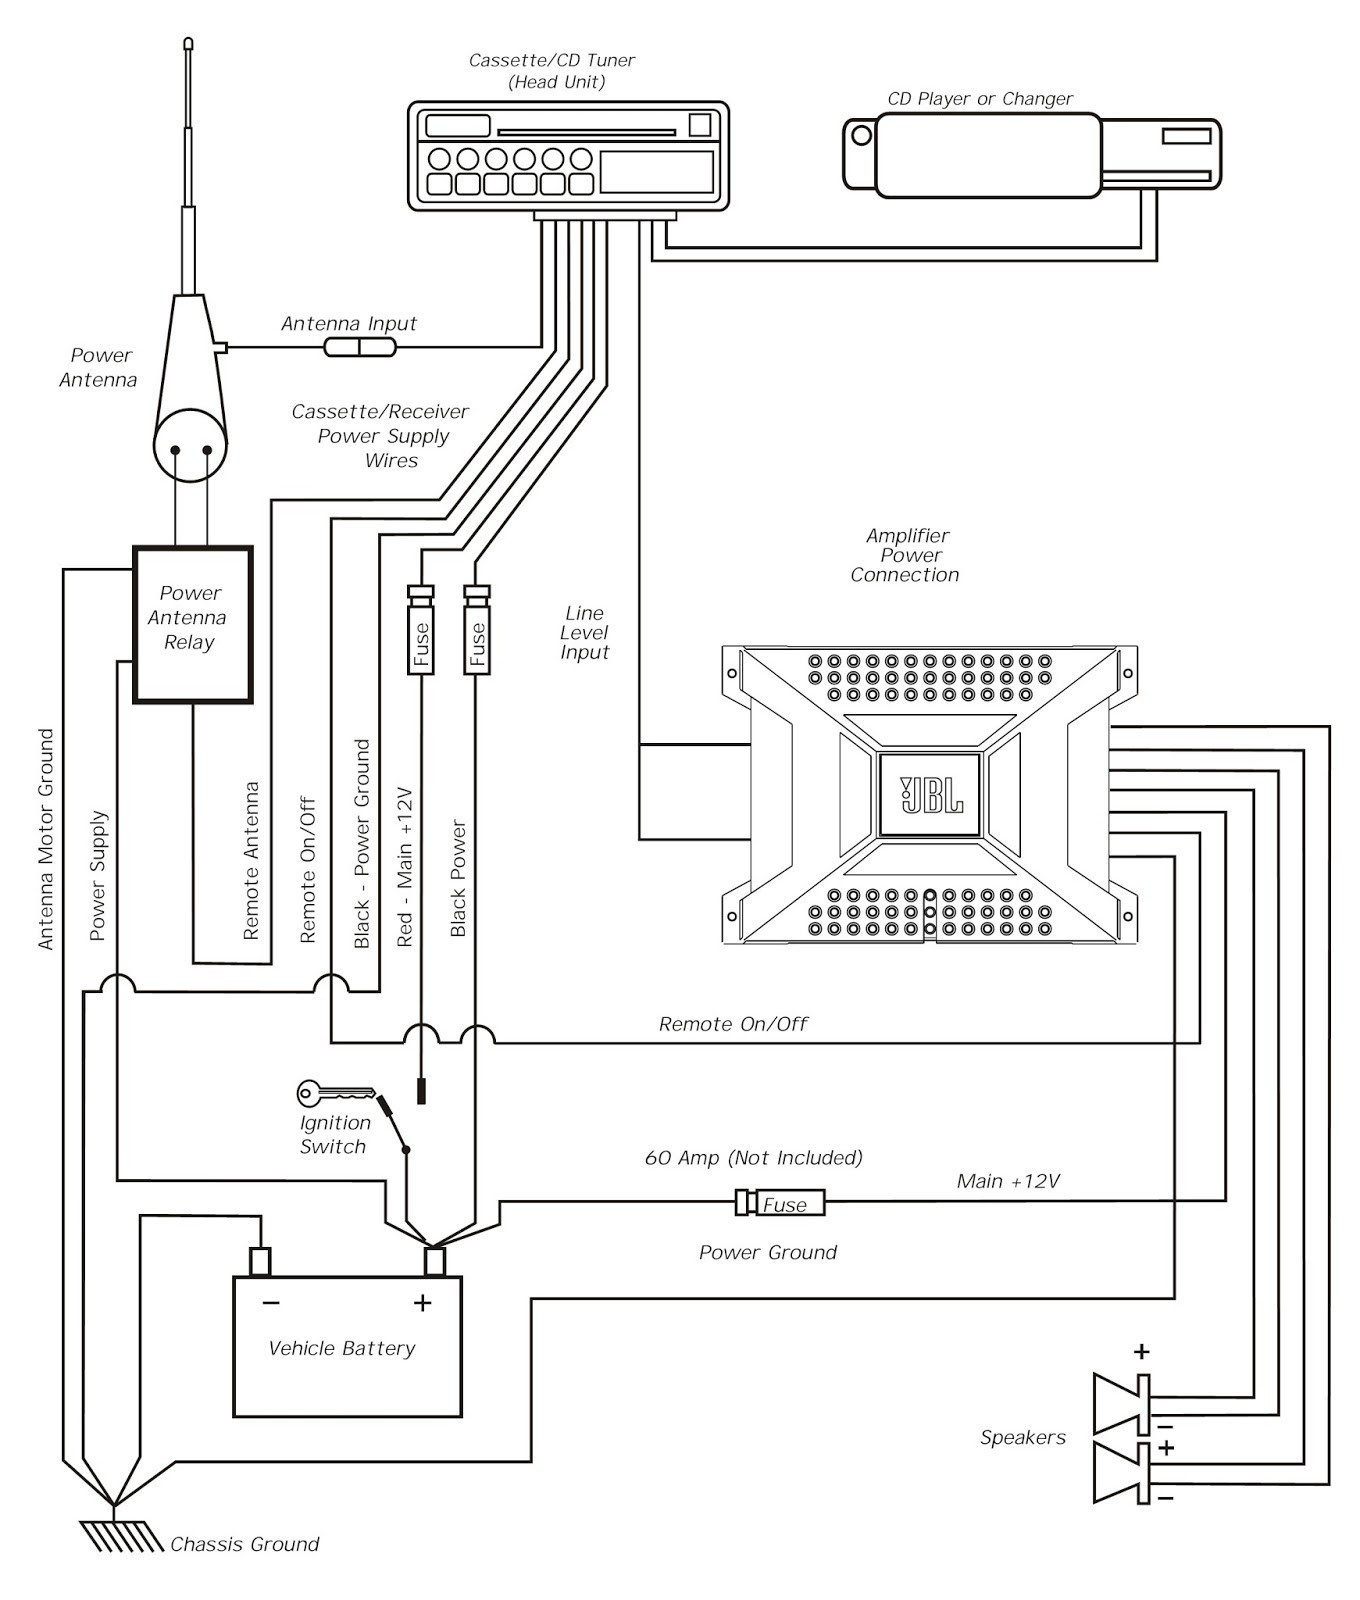 Ac Ammeter Wiring Diagram New Wiring Diagram for Ac Amp Meter Save Copper Internal Basic Wiring